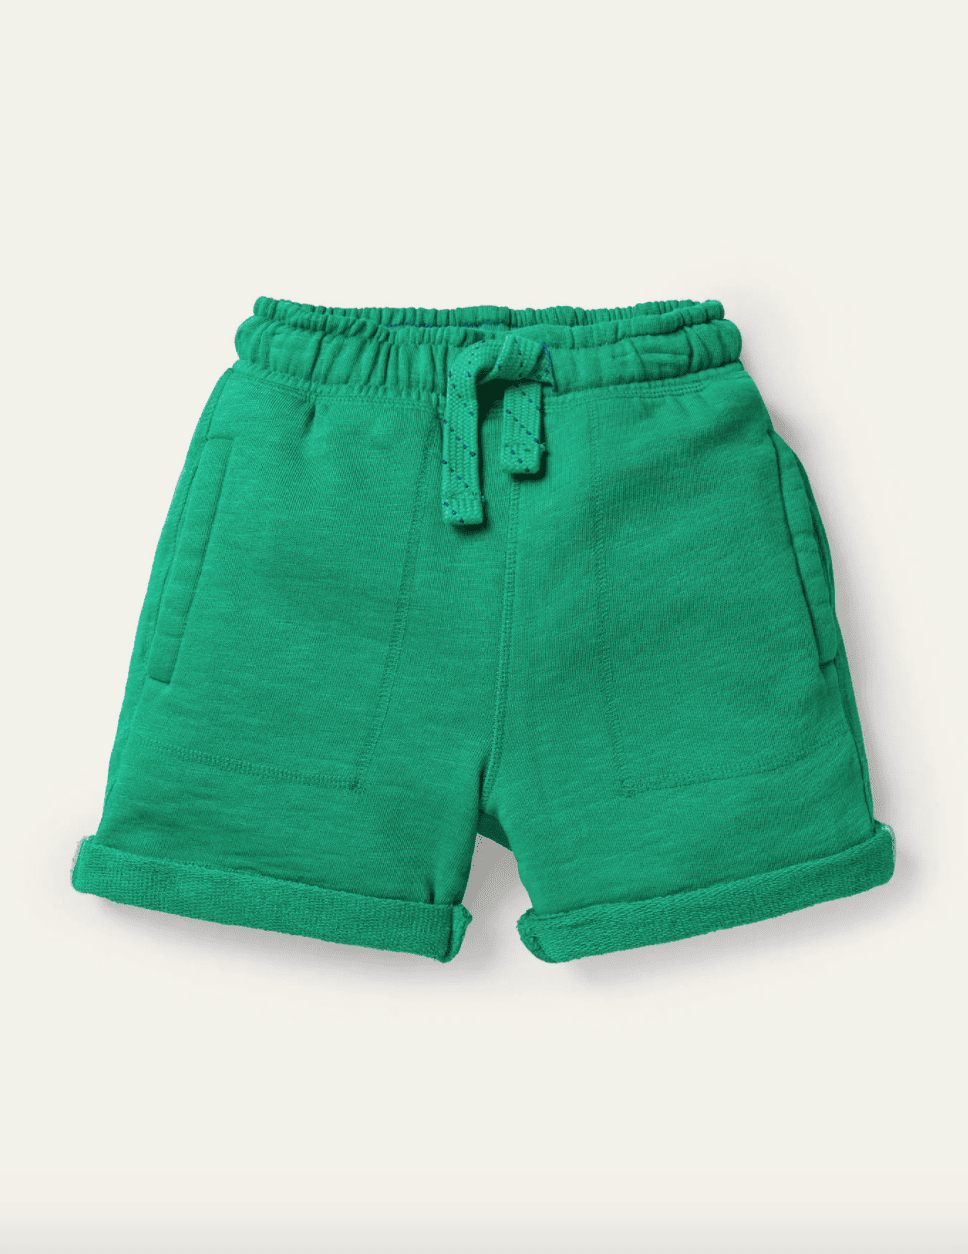 Bright green sweatshorts with nice big pockets and a drawstring